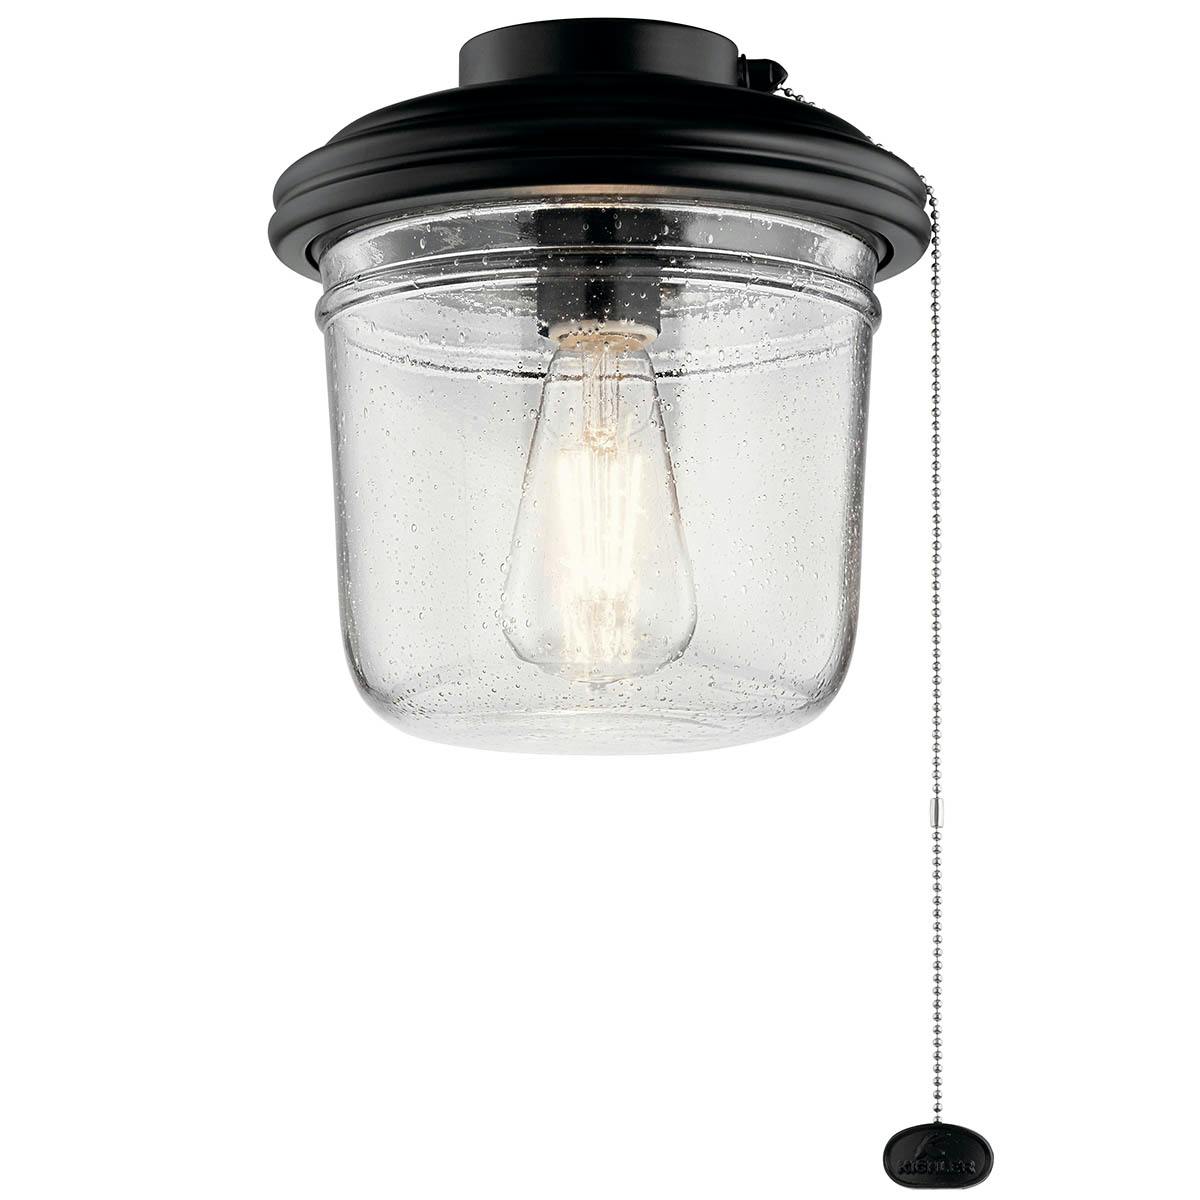 Yorke LED Outdoor Light Kit Satin Black on a white background